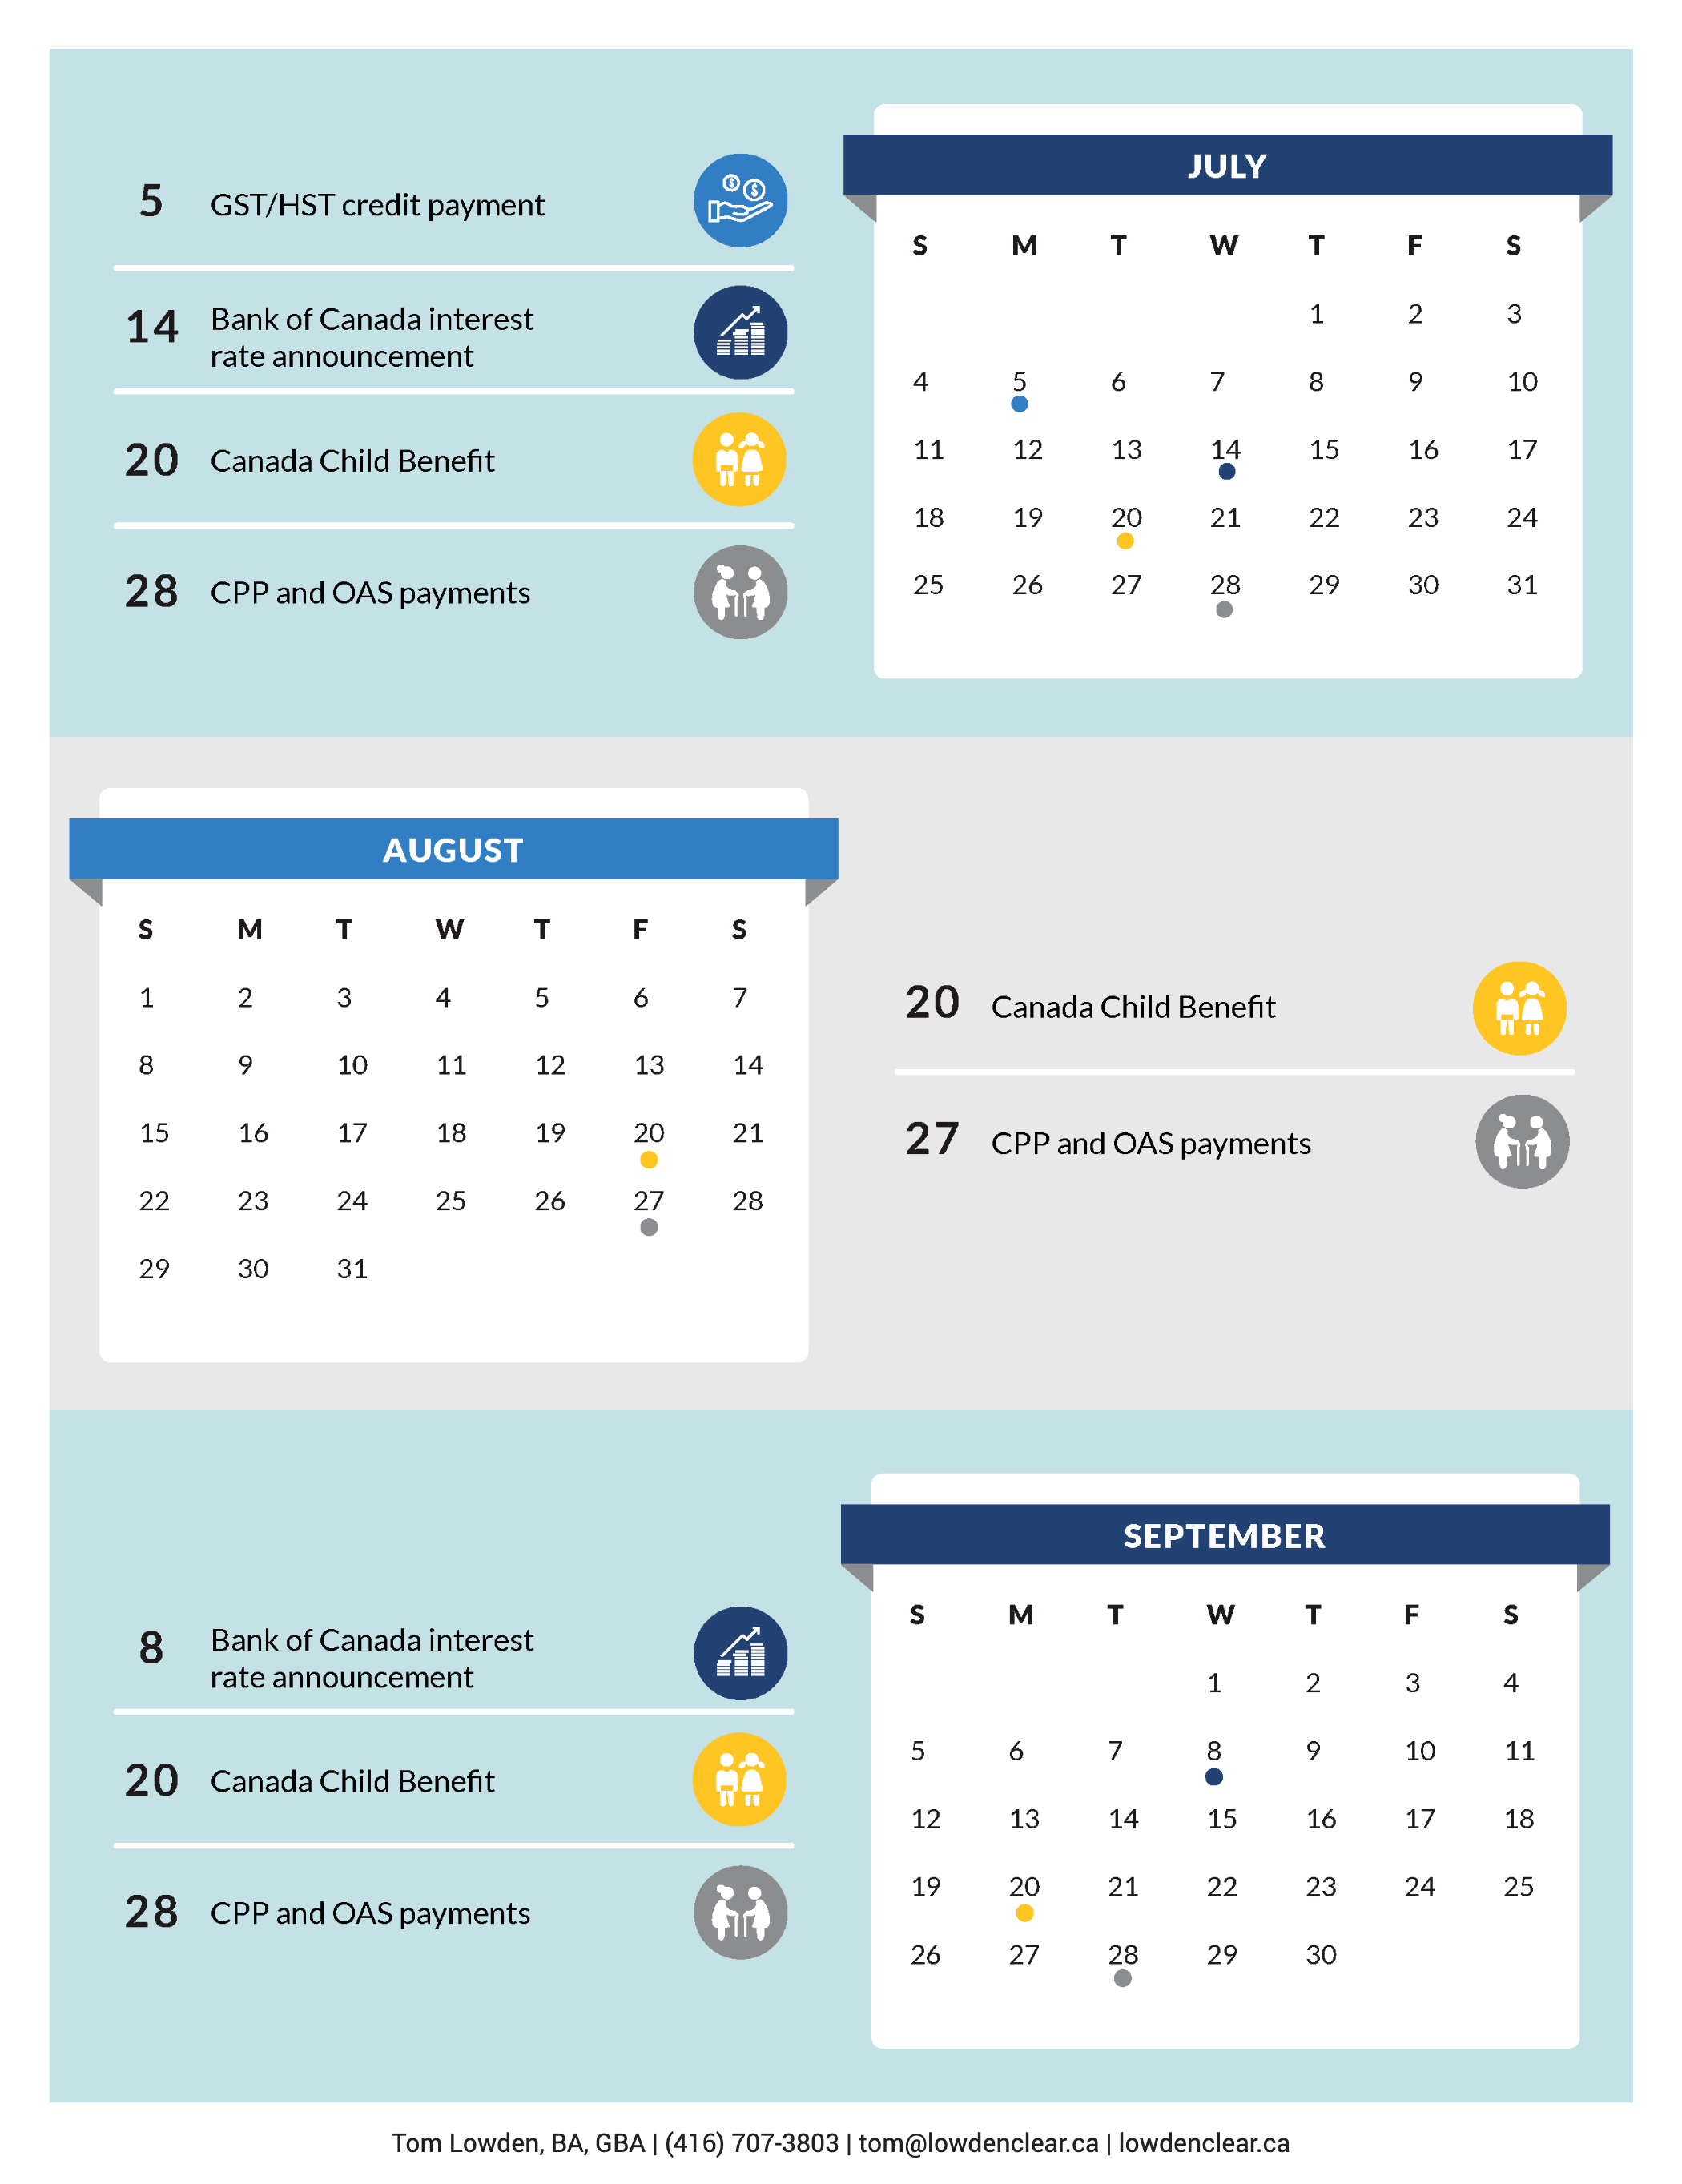 2021 Financial Calendar